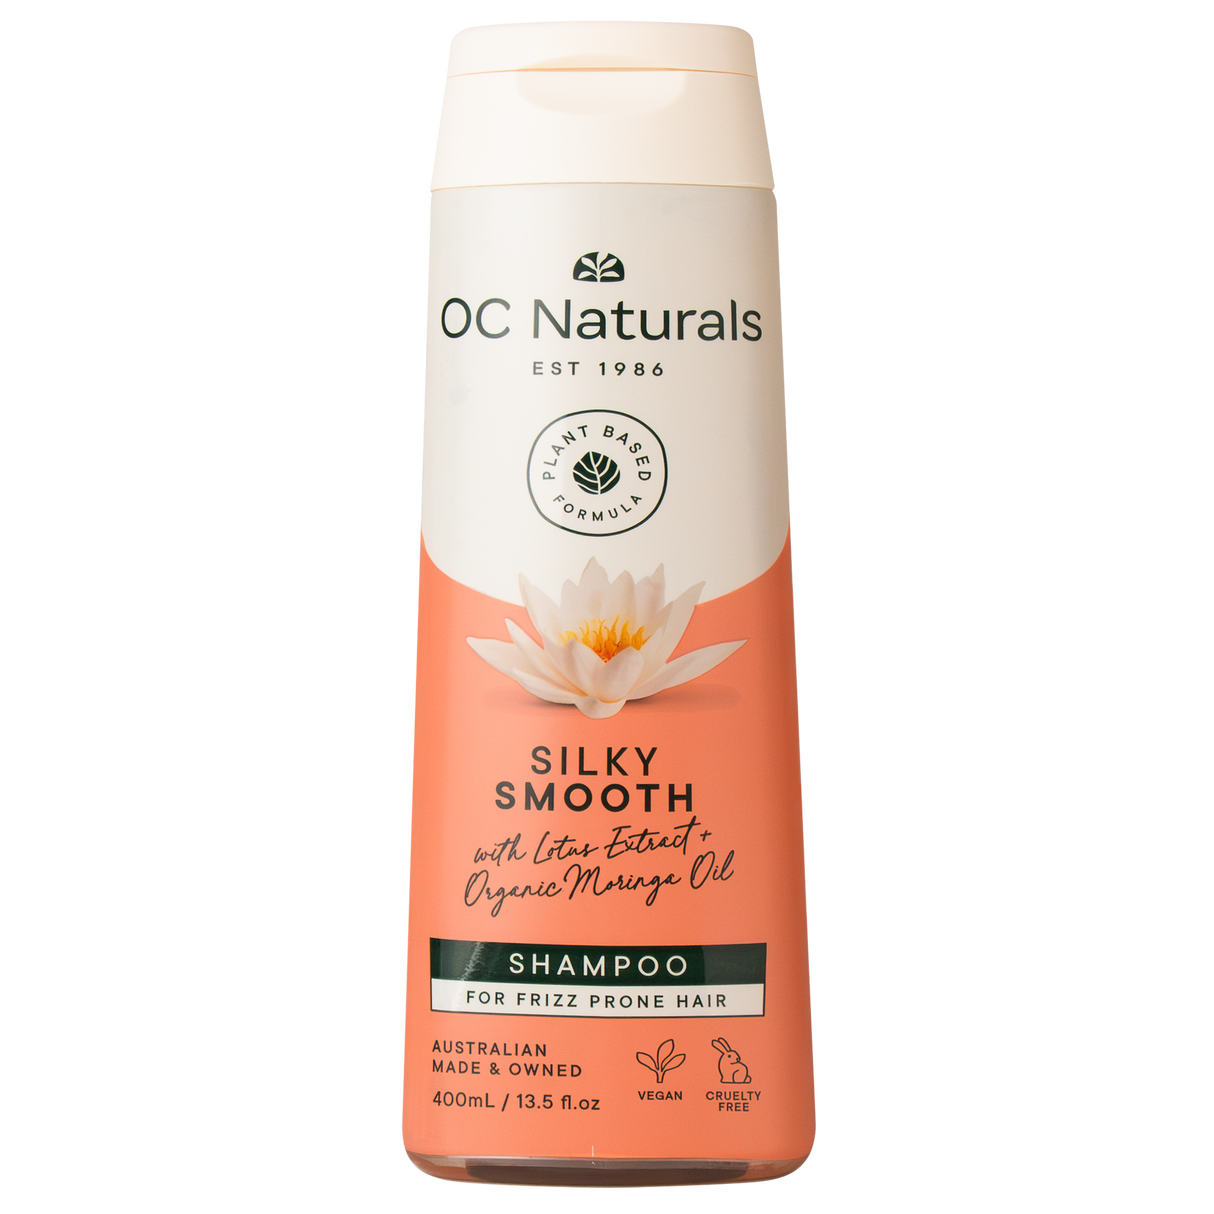 OC Naturals Silky Smooth Shampoo 400ml